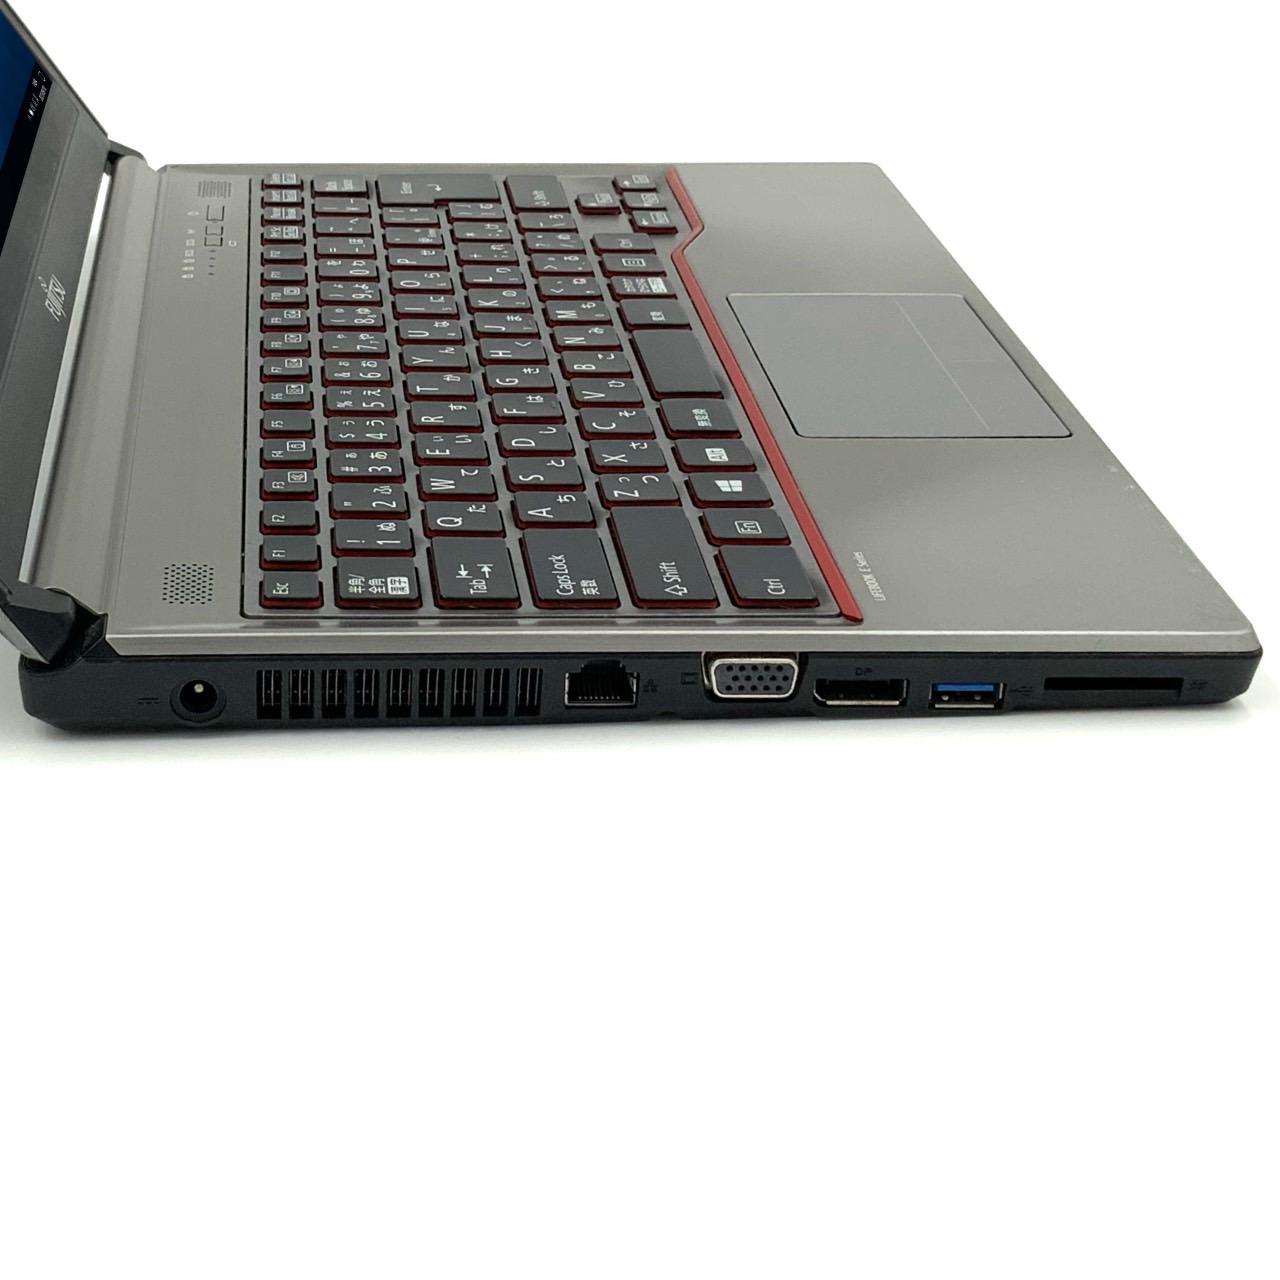 FUJITSU LIFEBOOK E736 モバイルノート Notebook 中古パソコン 無線LAN 新品SSD120GB 64bit